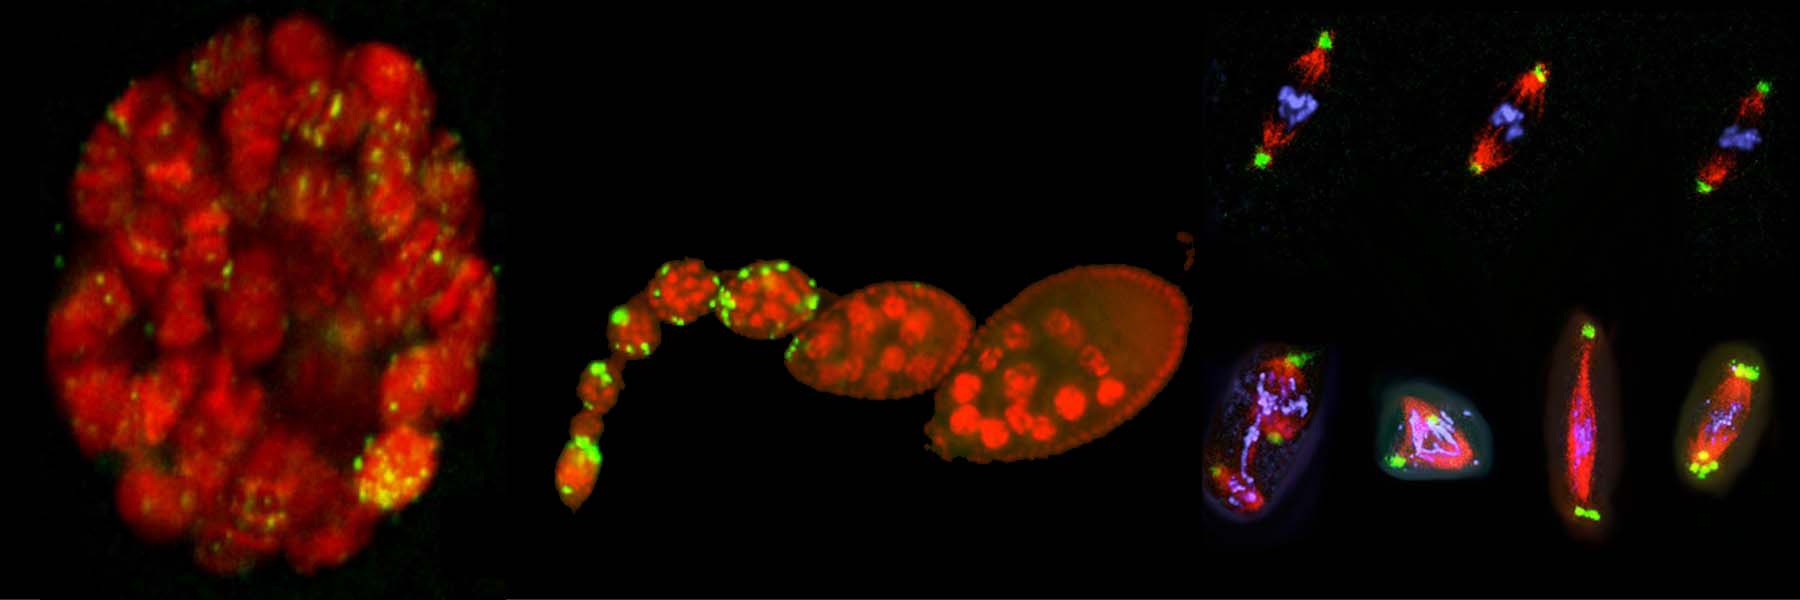 Drosophila DNA damage, apoptosis and chromosome instability.